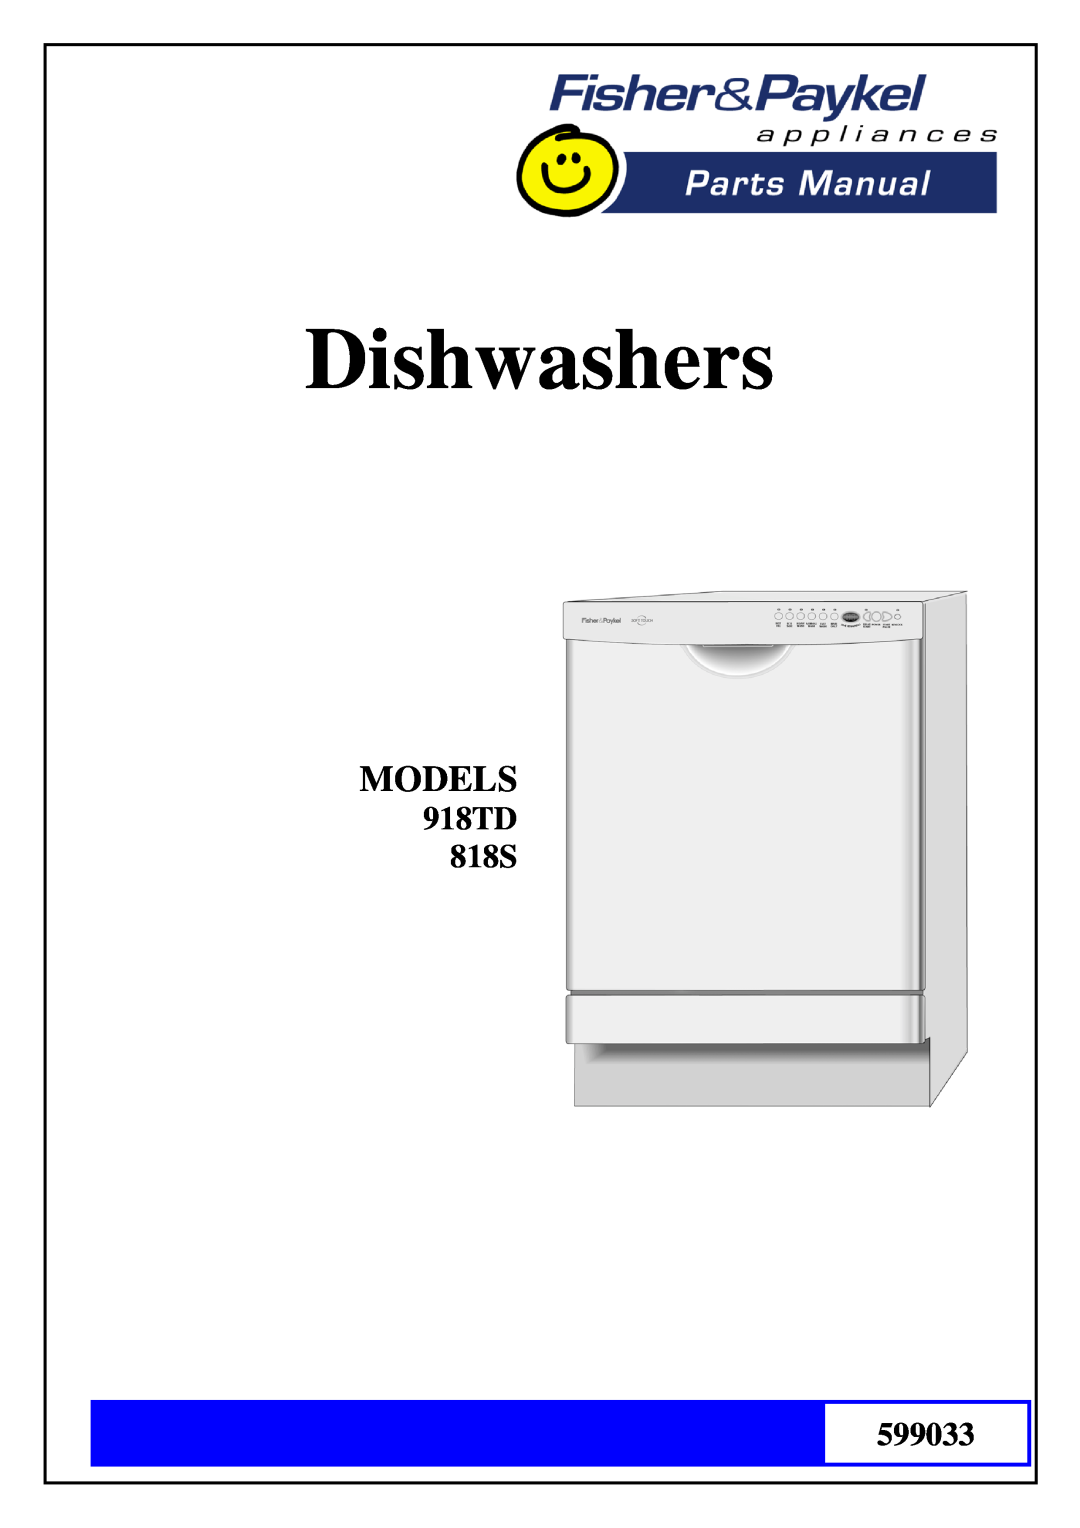 Fisher & Paykel manual Dishwashers, Models, 918TD 818S 